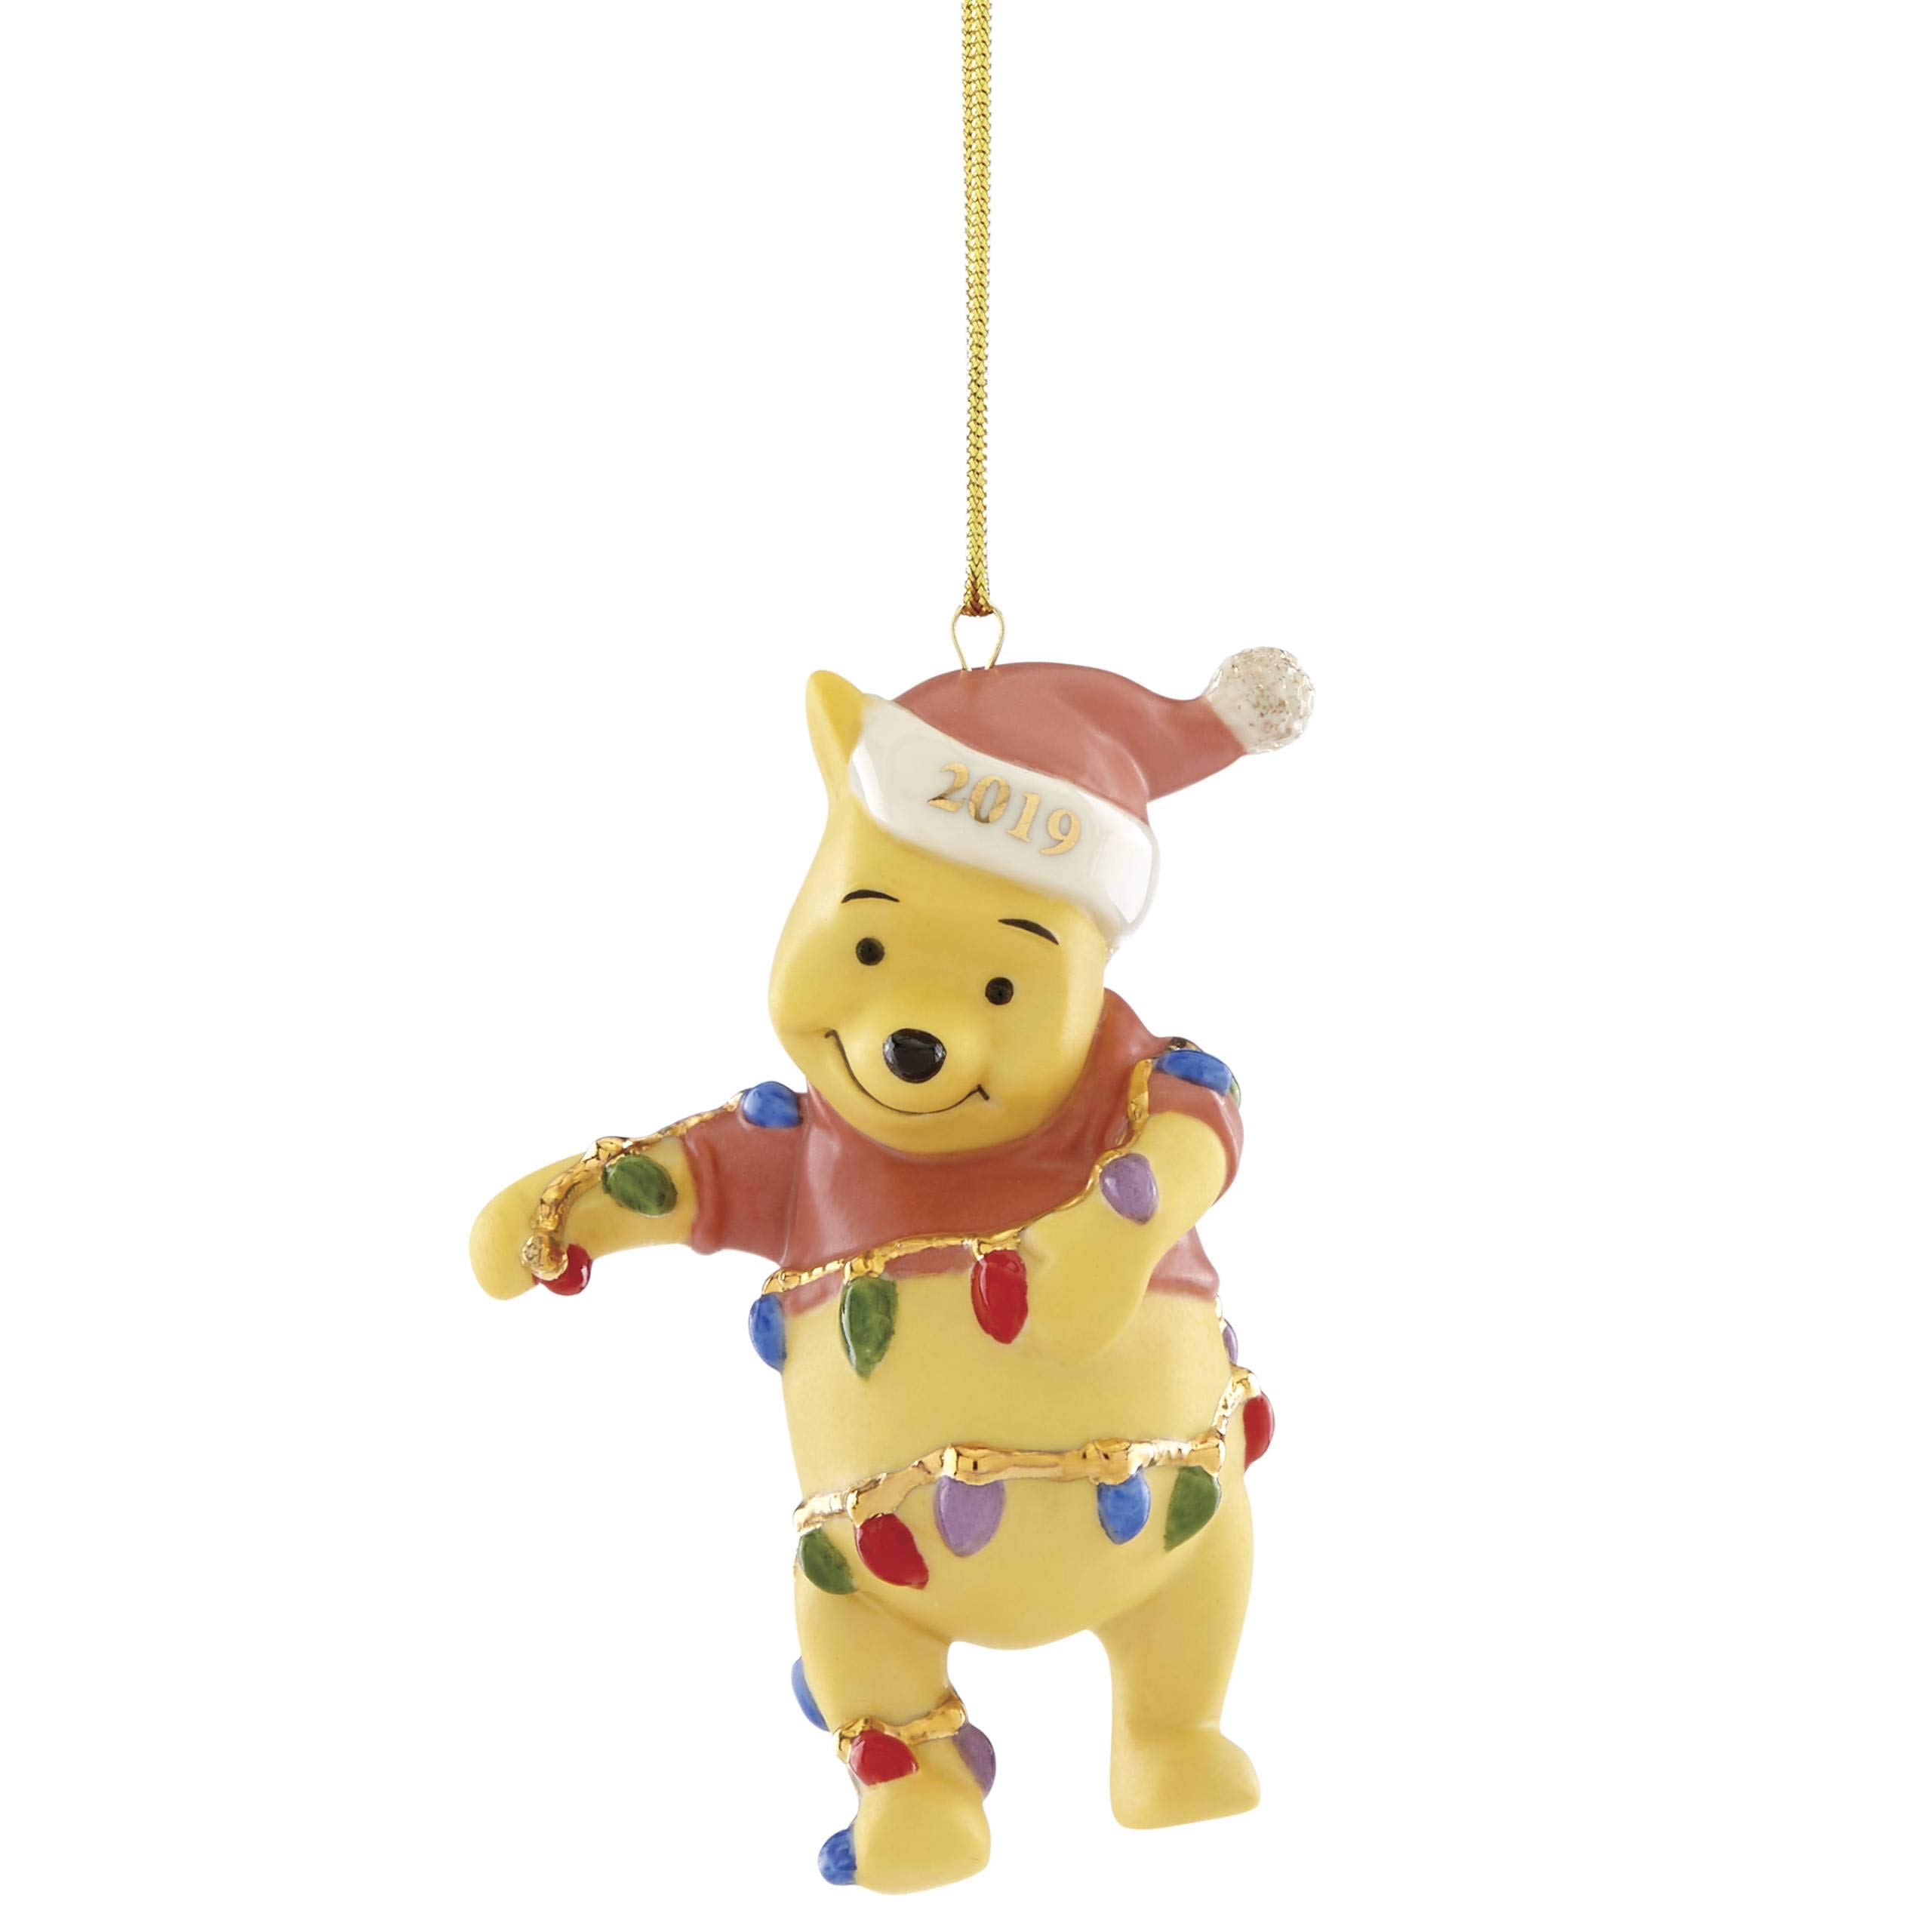 Lenox 884444 Disney 2019 Pooh's Bright Ideas Ornament